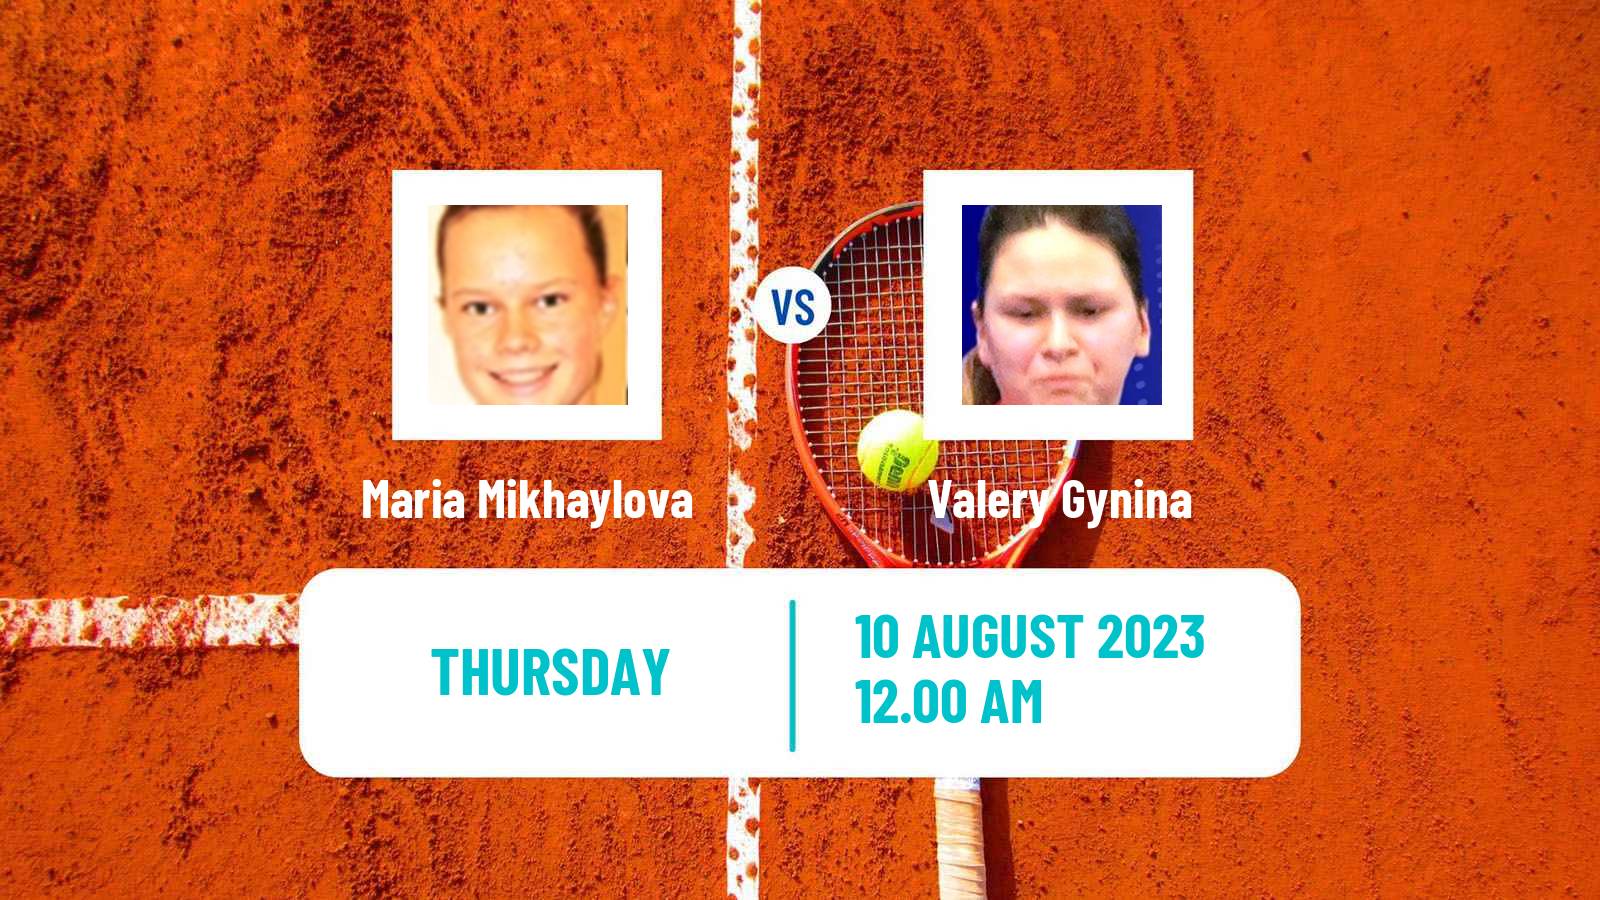 Tennis ITF W15 Ust Kamenogorsk Women Maria Mikhaylova - Valery Gynina